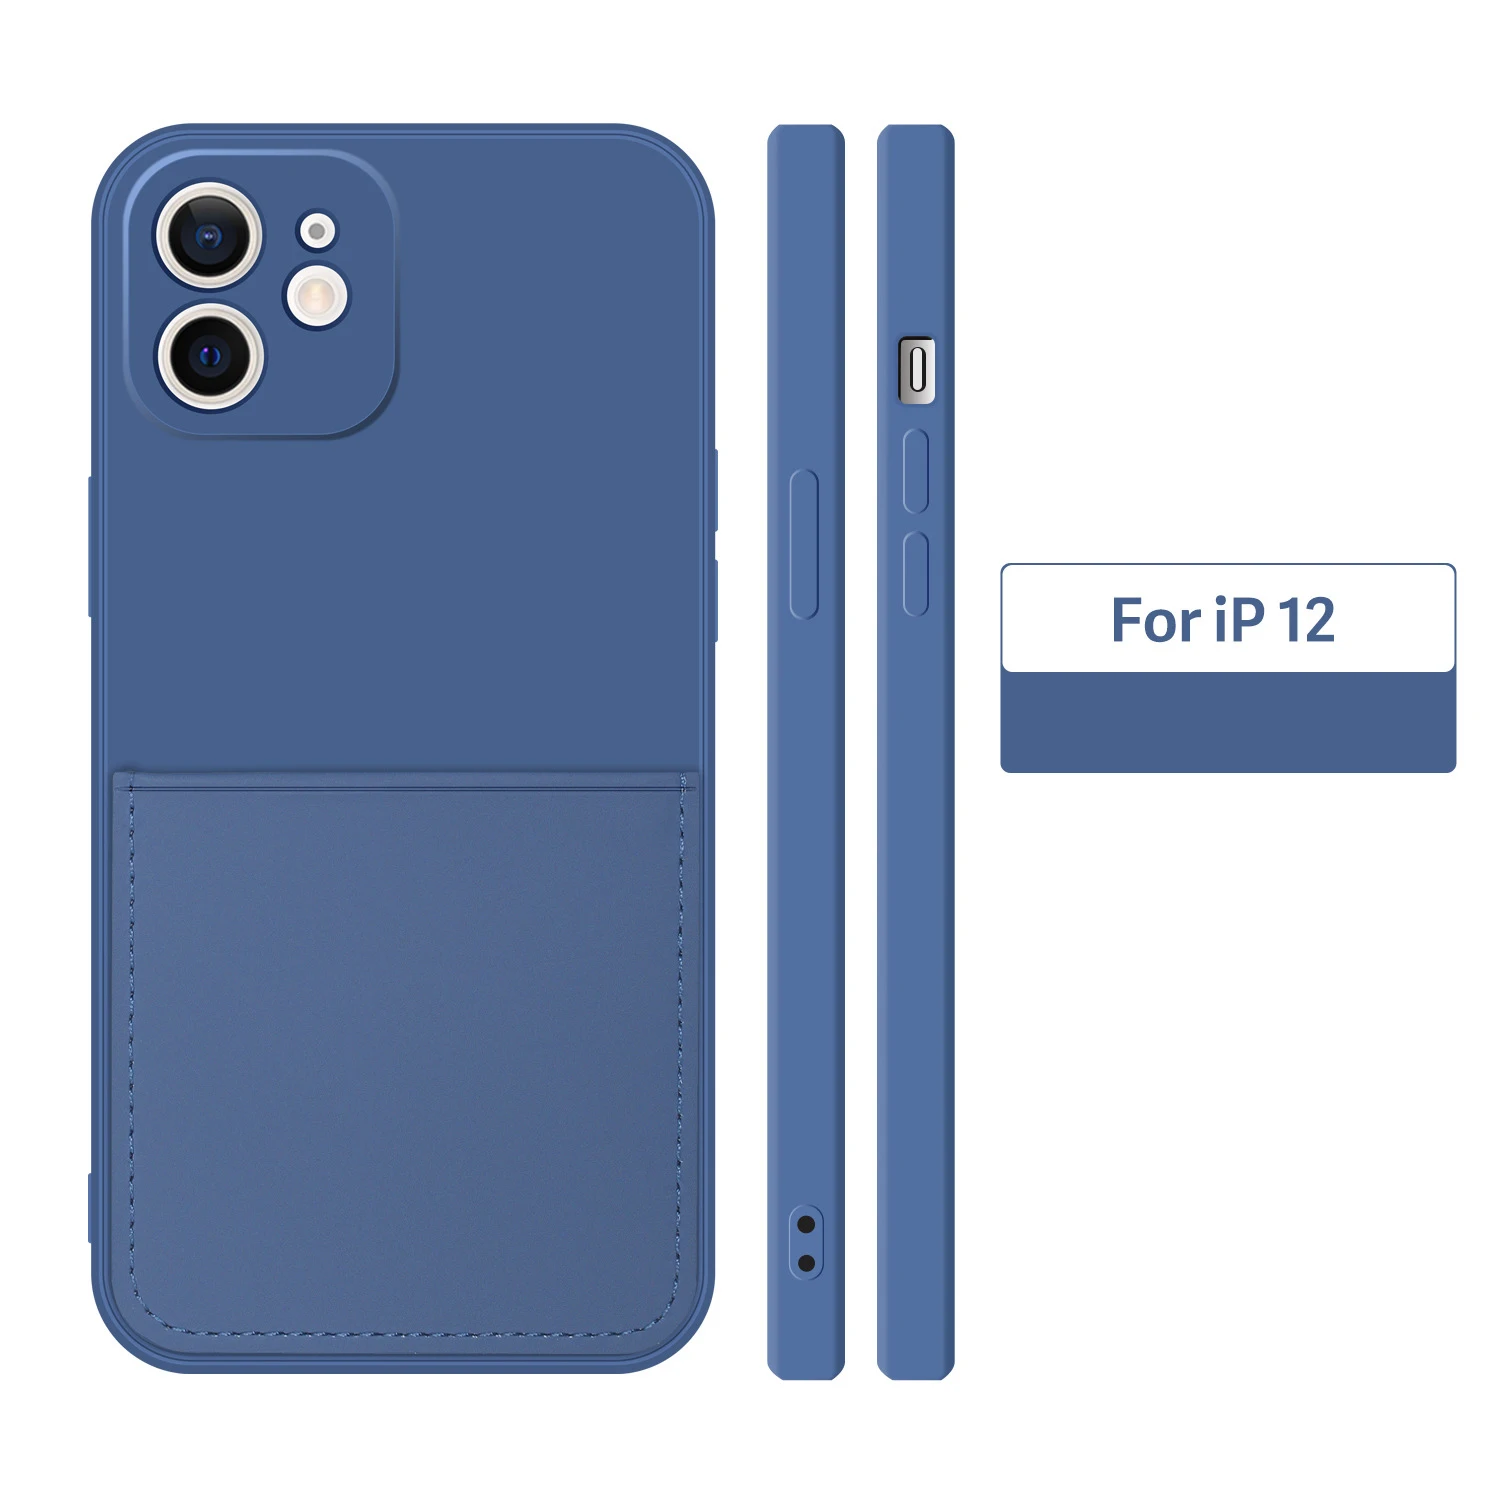 

For iPhone 14 Promax Imitation Liquid Silica Gel For iPhone 13 Card Bag Case For iPhone XSFor iPhone 12 Card Bag Cover 8